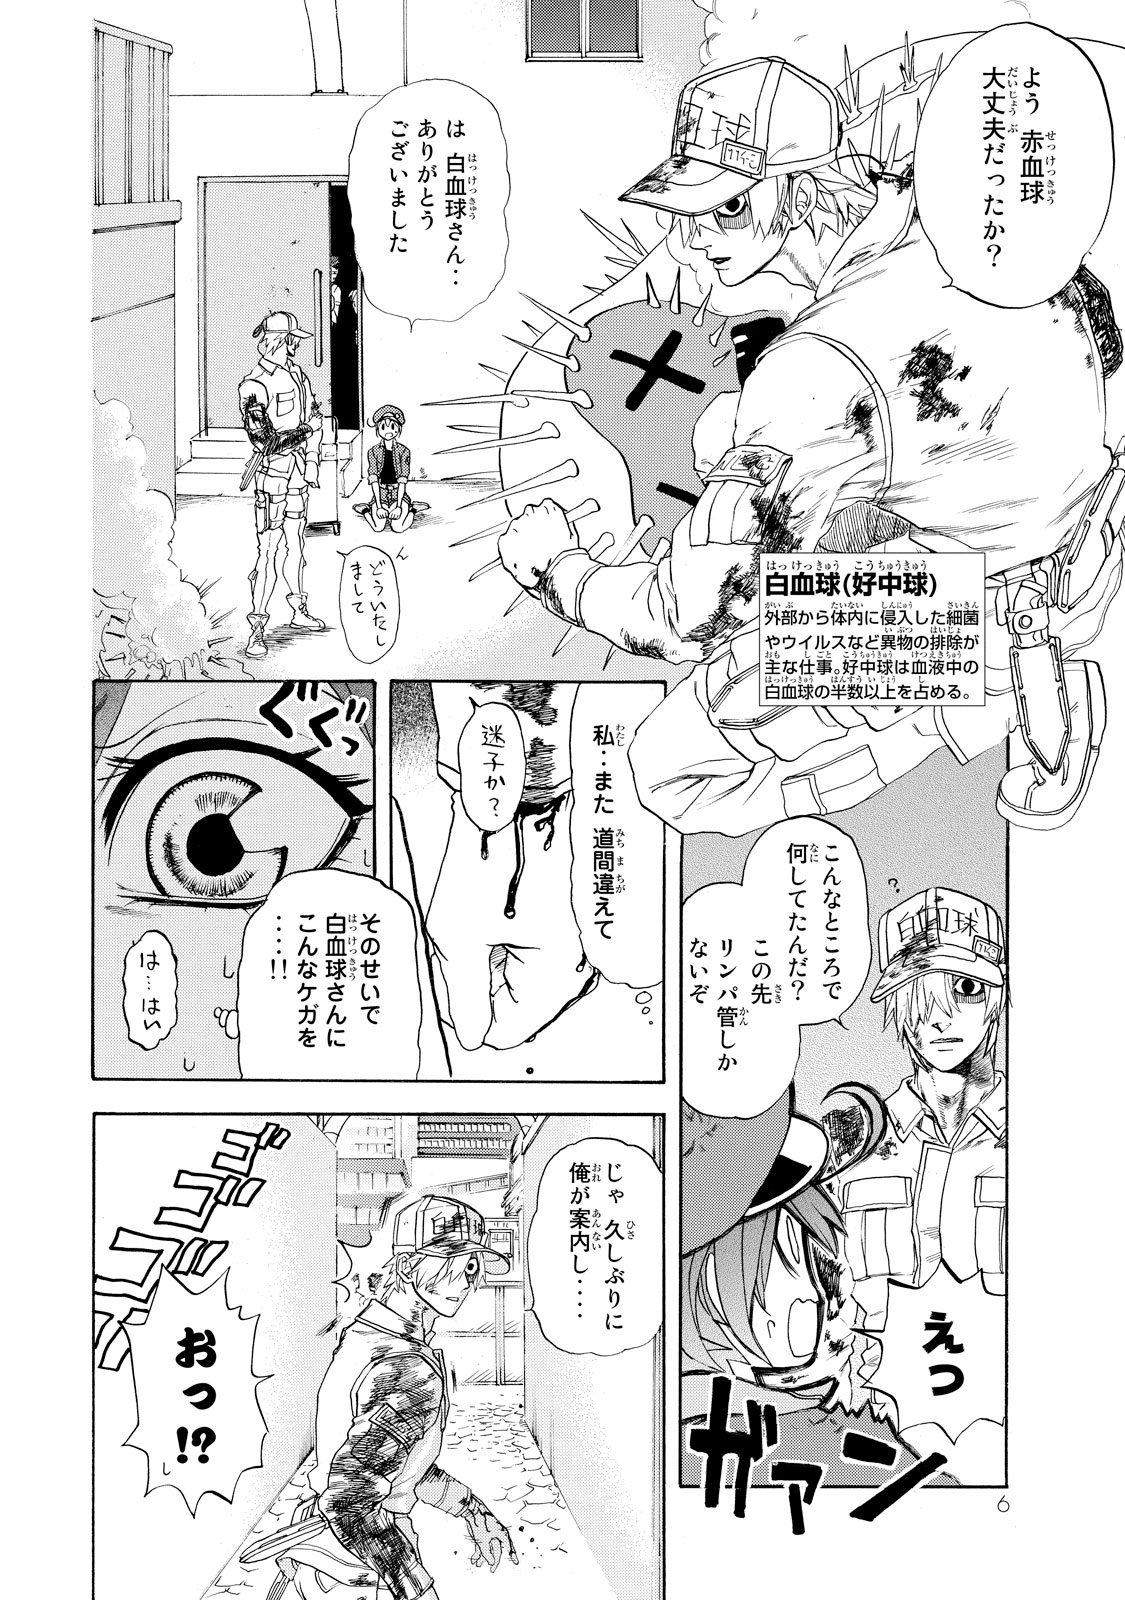 Hataraku Saibou - Chapter 10 - Page 8